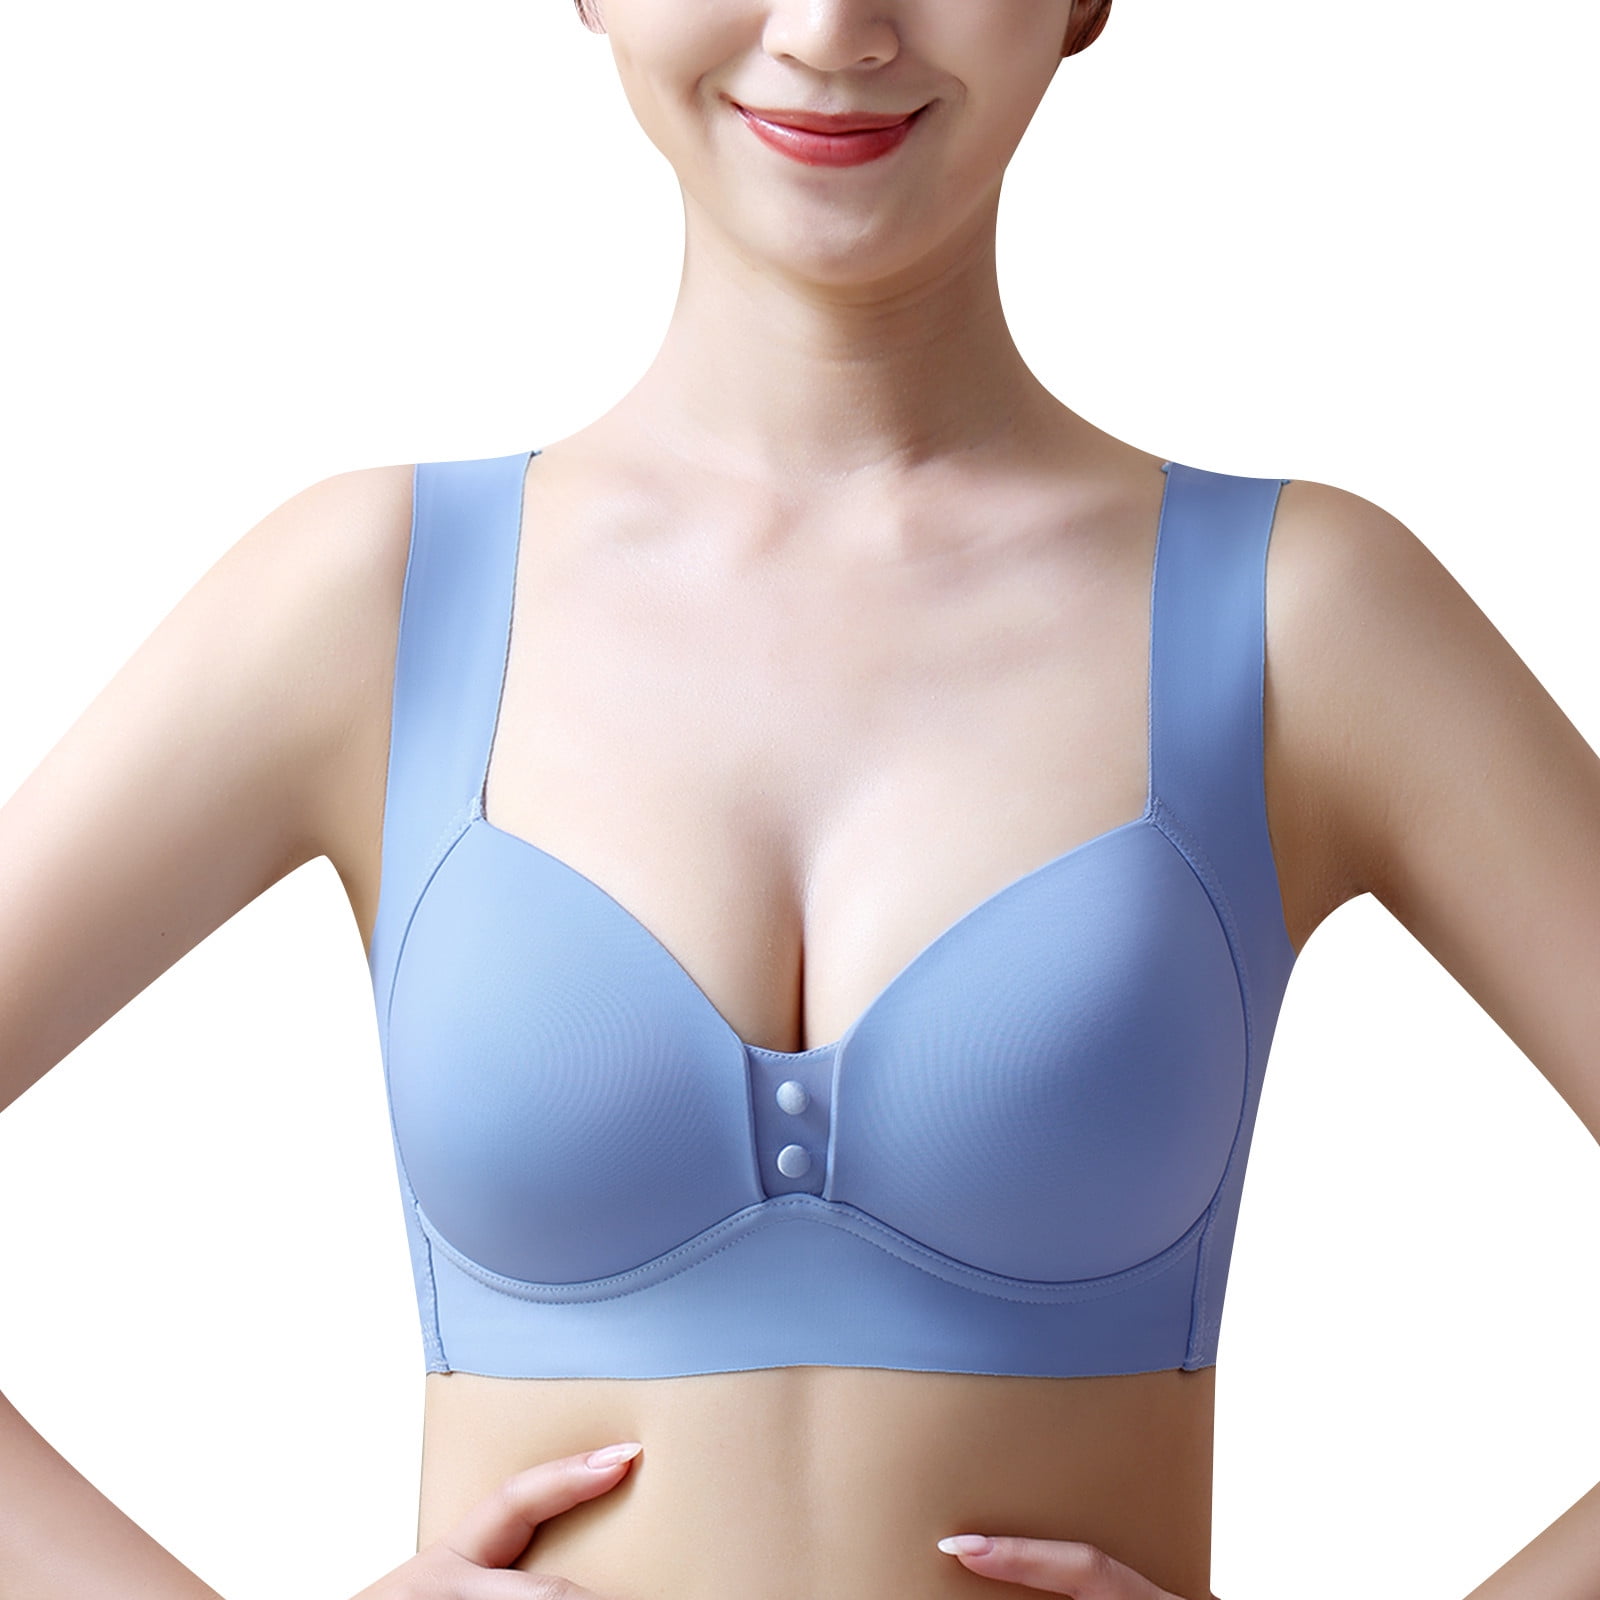  HSIA Minimizer Bras For Women Full Coverage Underwire Bras  Plus Size